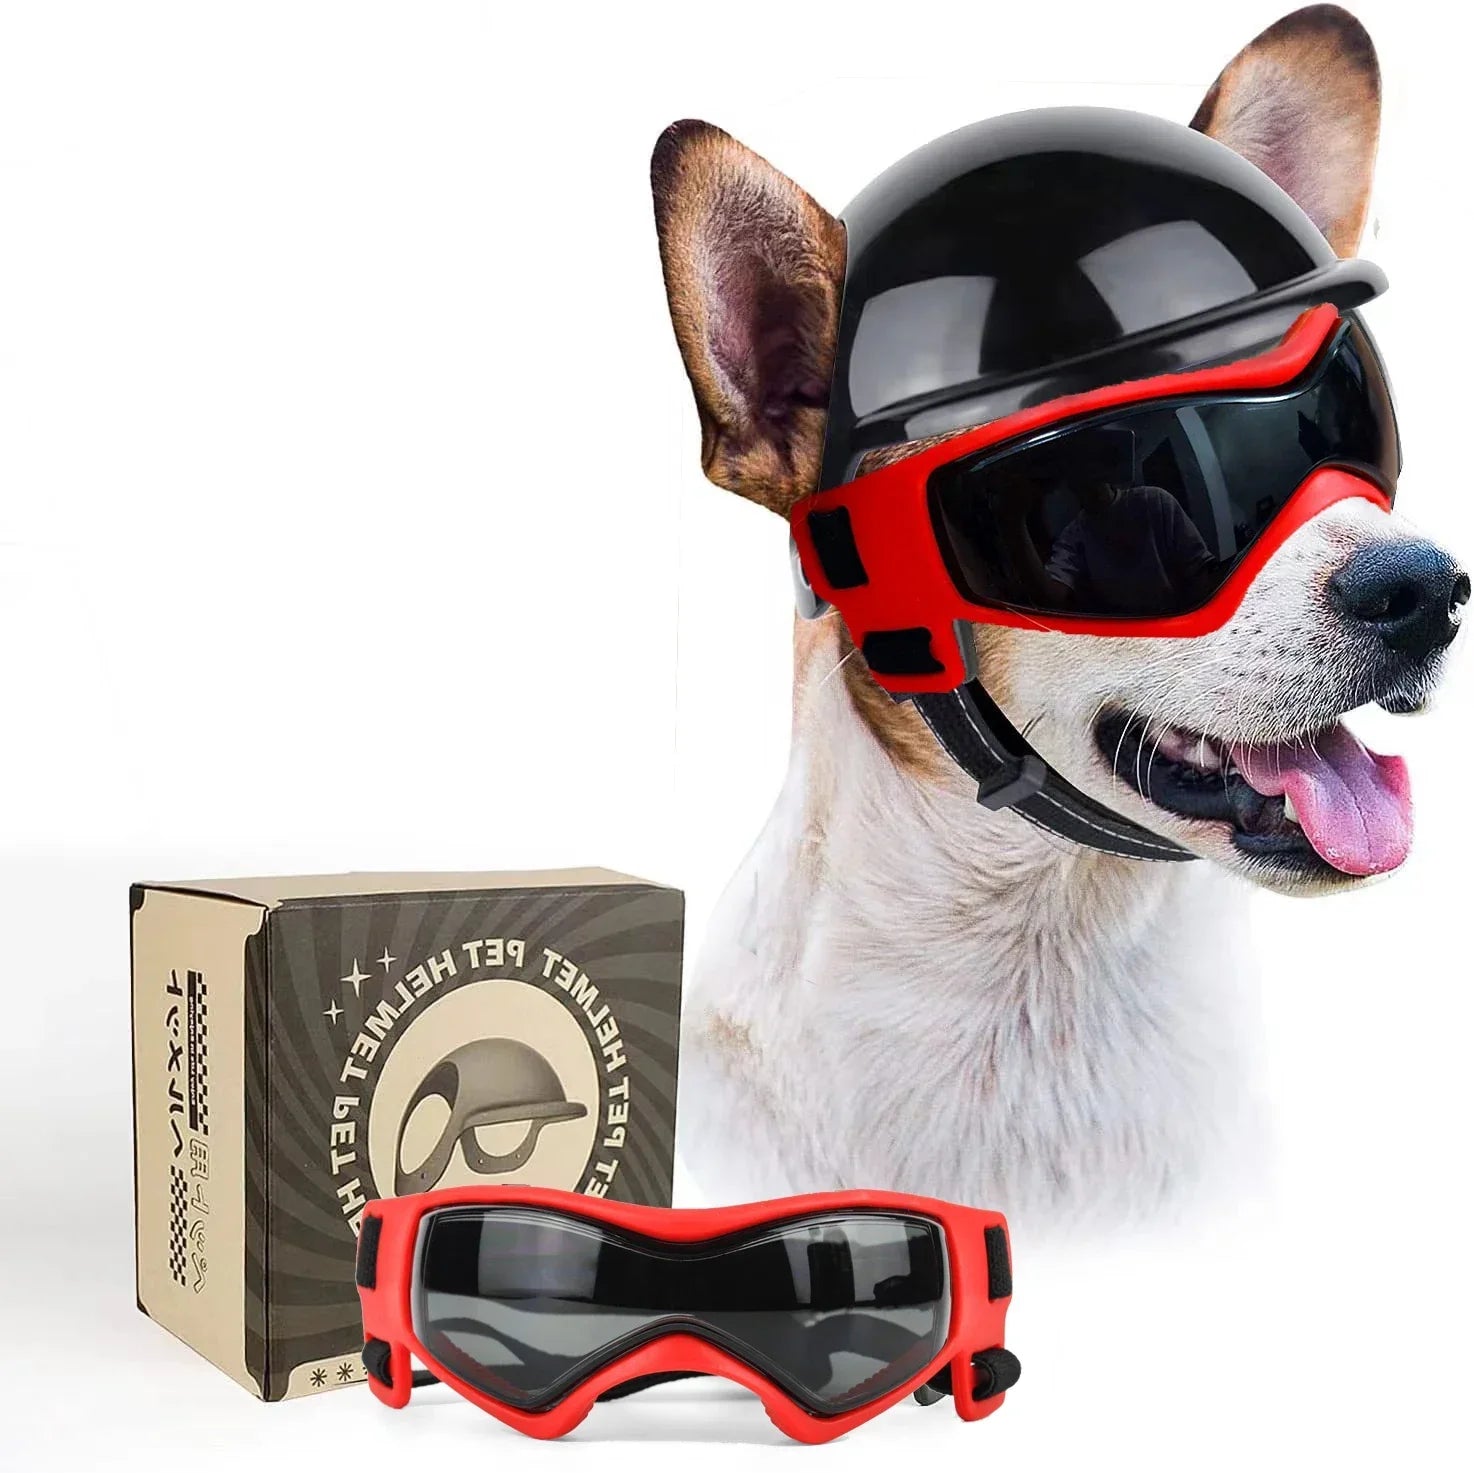 Dog Sunglasses and Helmet Set for Stylish Pet Safety  ourlum.com   